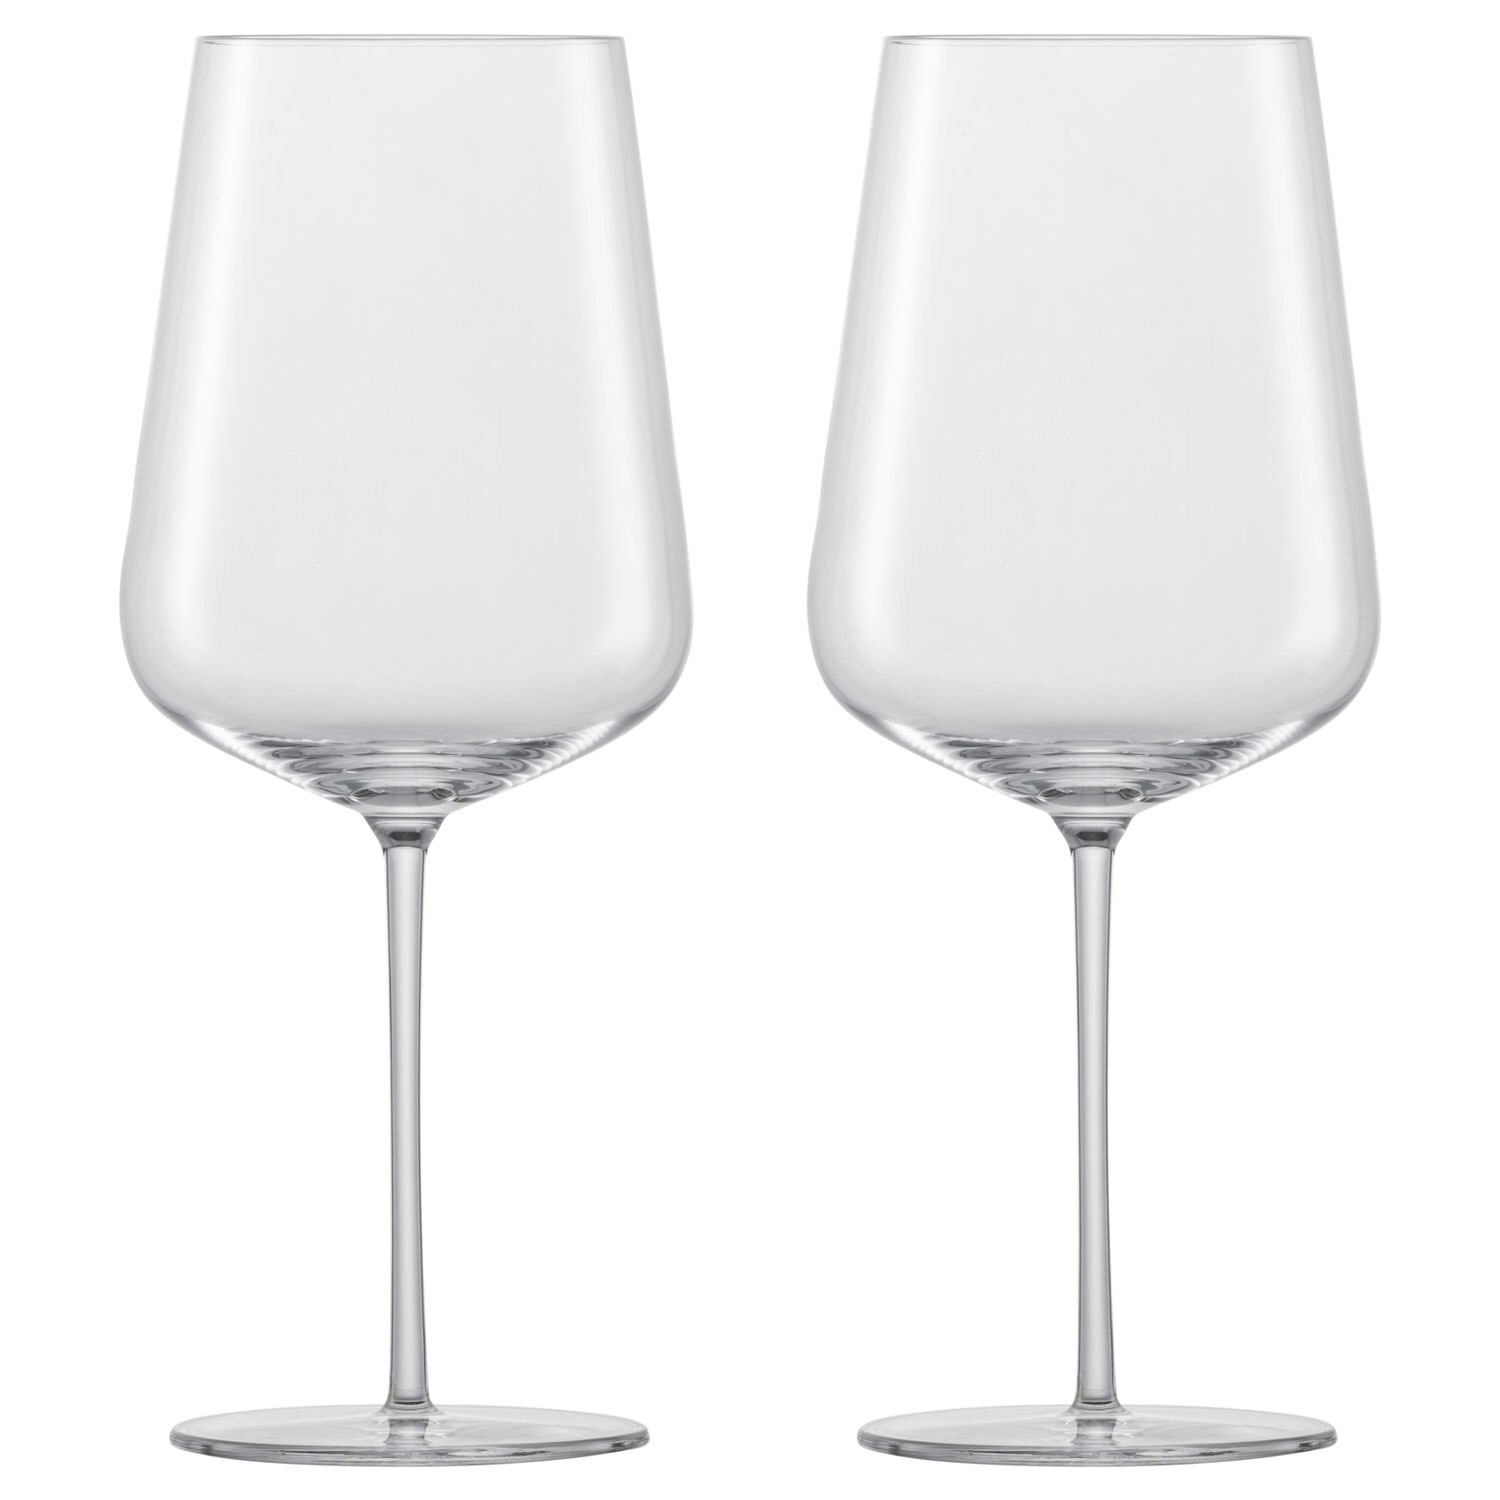 Set of 6 Bordeaux wine glasses, Vervino, 742 ml - Schott Zwiesel